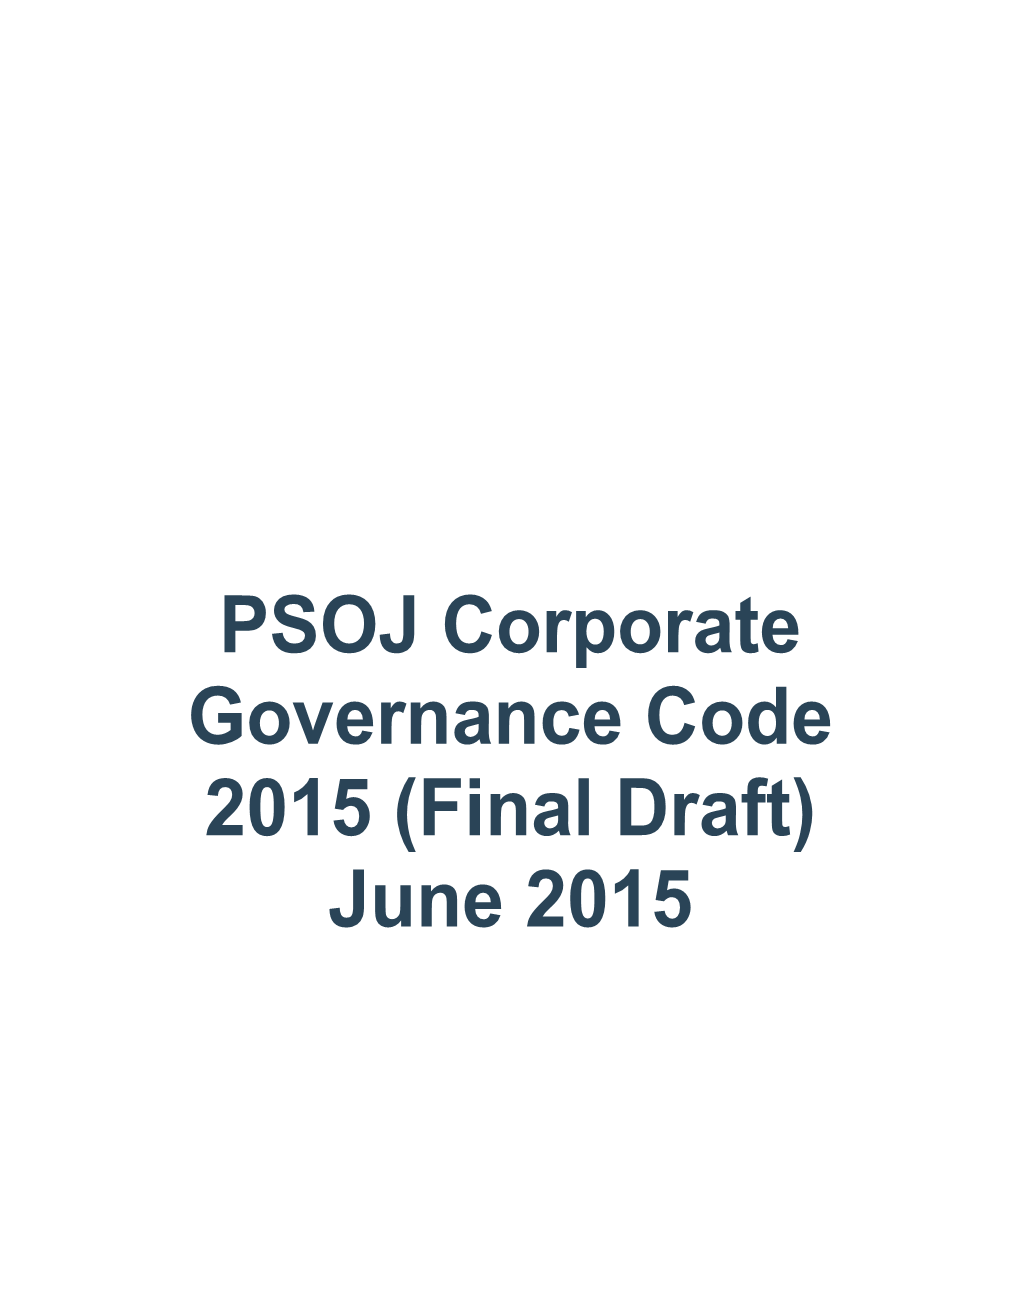 PSOJ Corporate Governance Code 2015 (Final Draft)